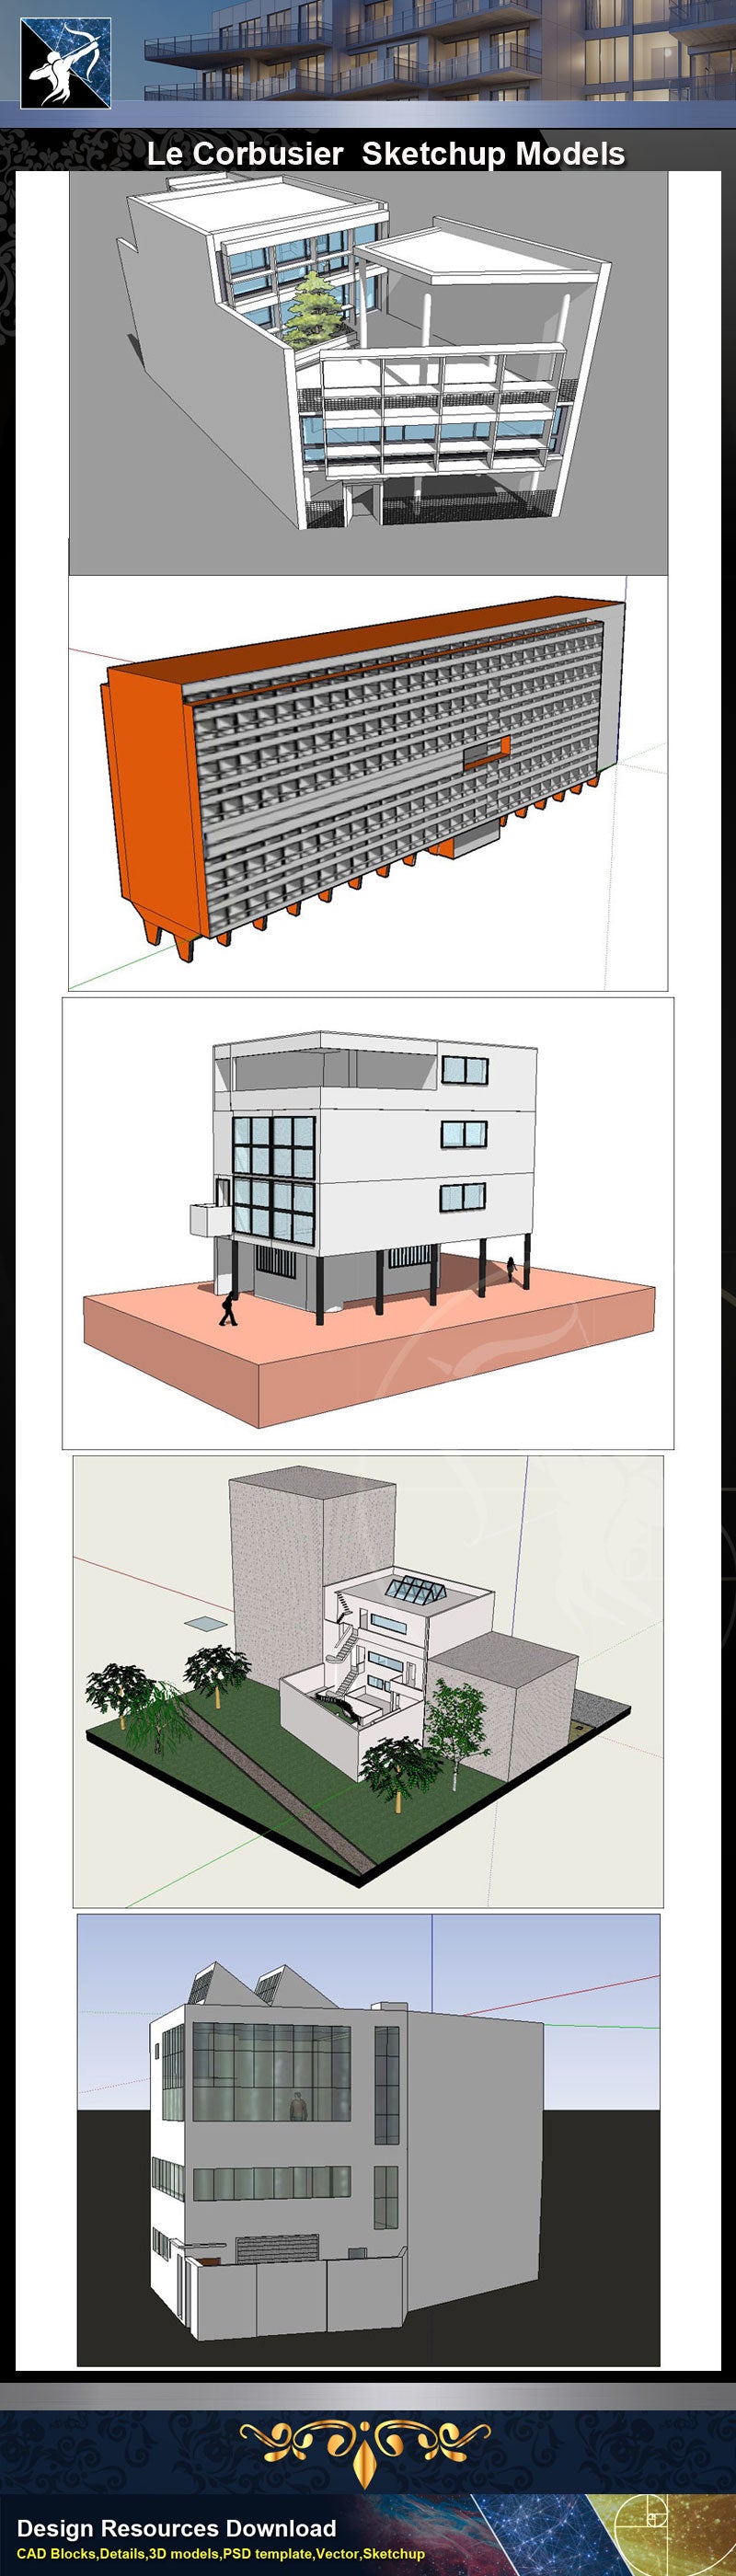 ★★Total 107 Pritzker Architecture Sketchup 3D Models★ (Best Recommanded!!)